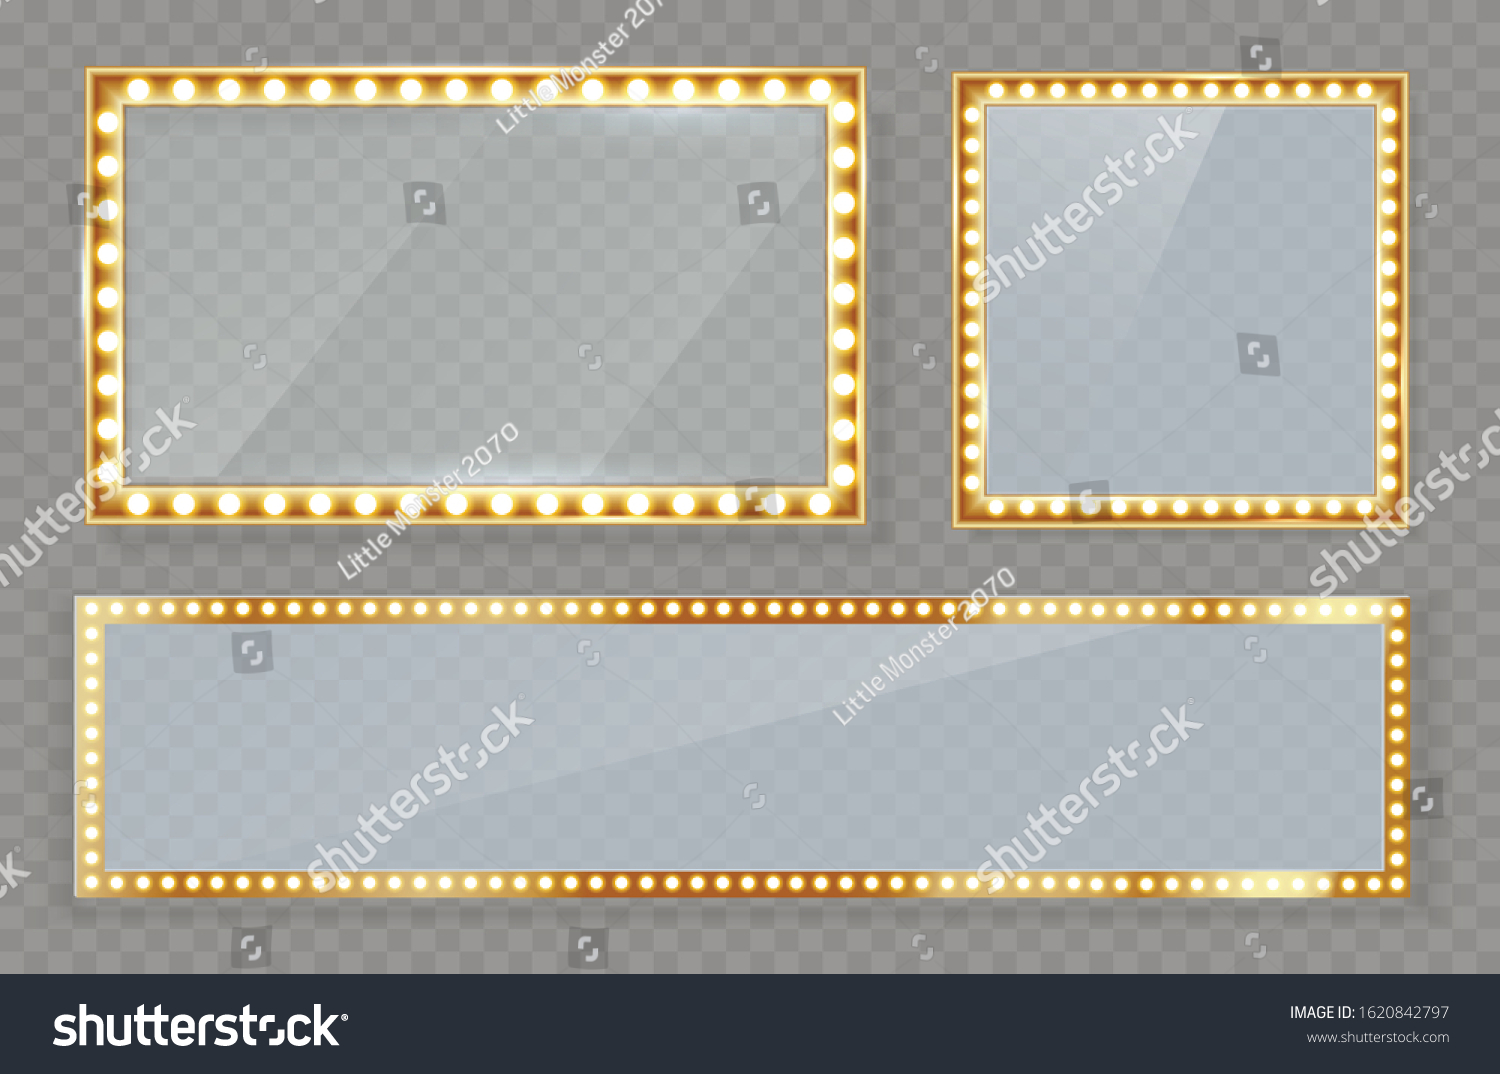 SVG of Mirror in frame with gold lights with light makeup lights in changing room or backroom. Vector illustration, EPS 10. svg